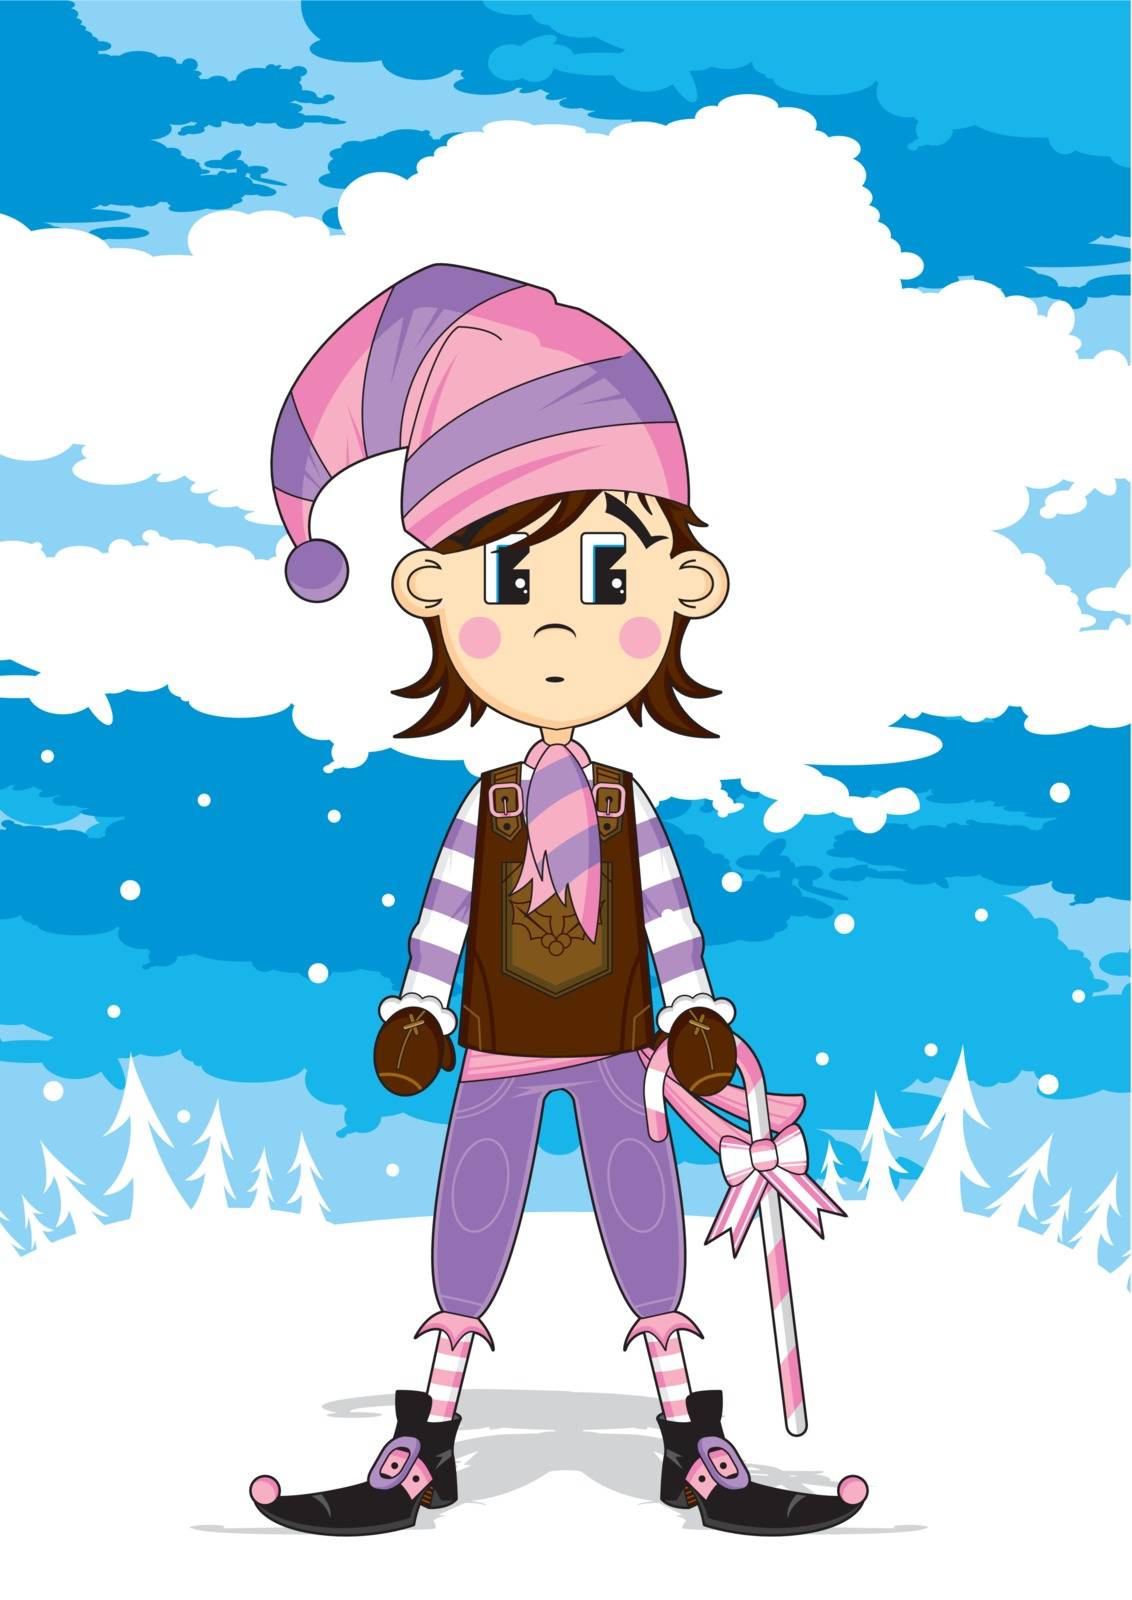 Cartoon Christmas Elf by markmurphycreative